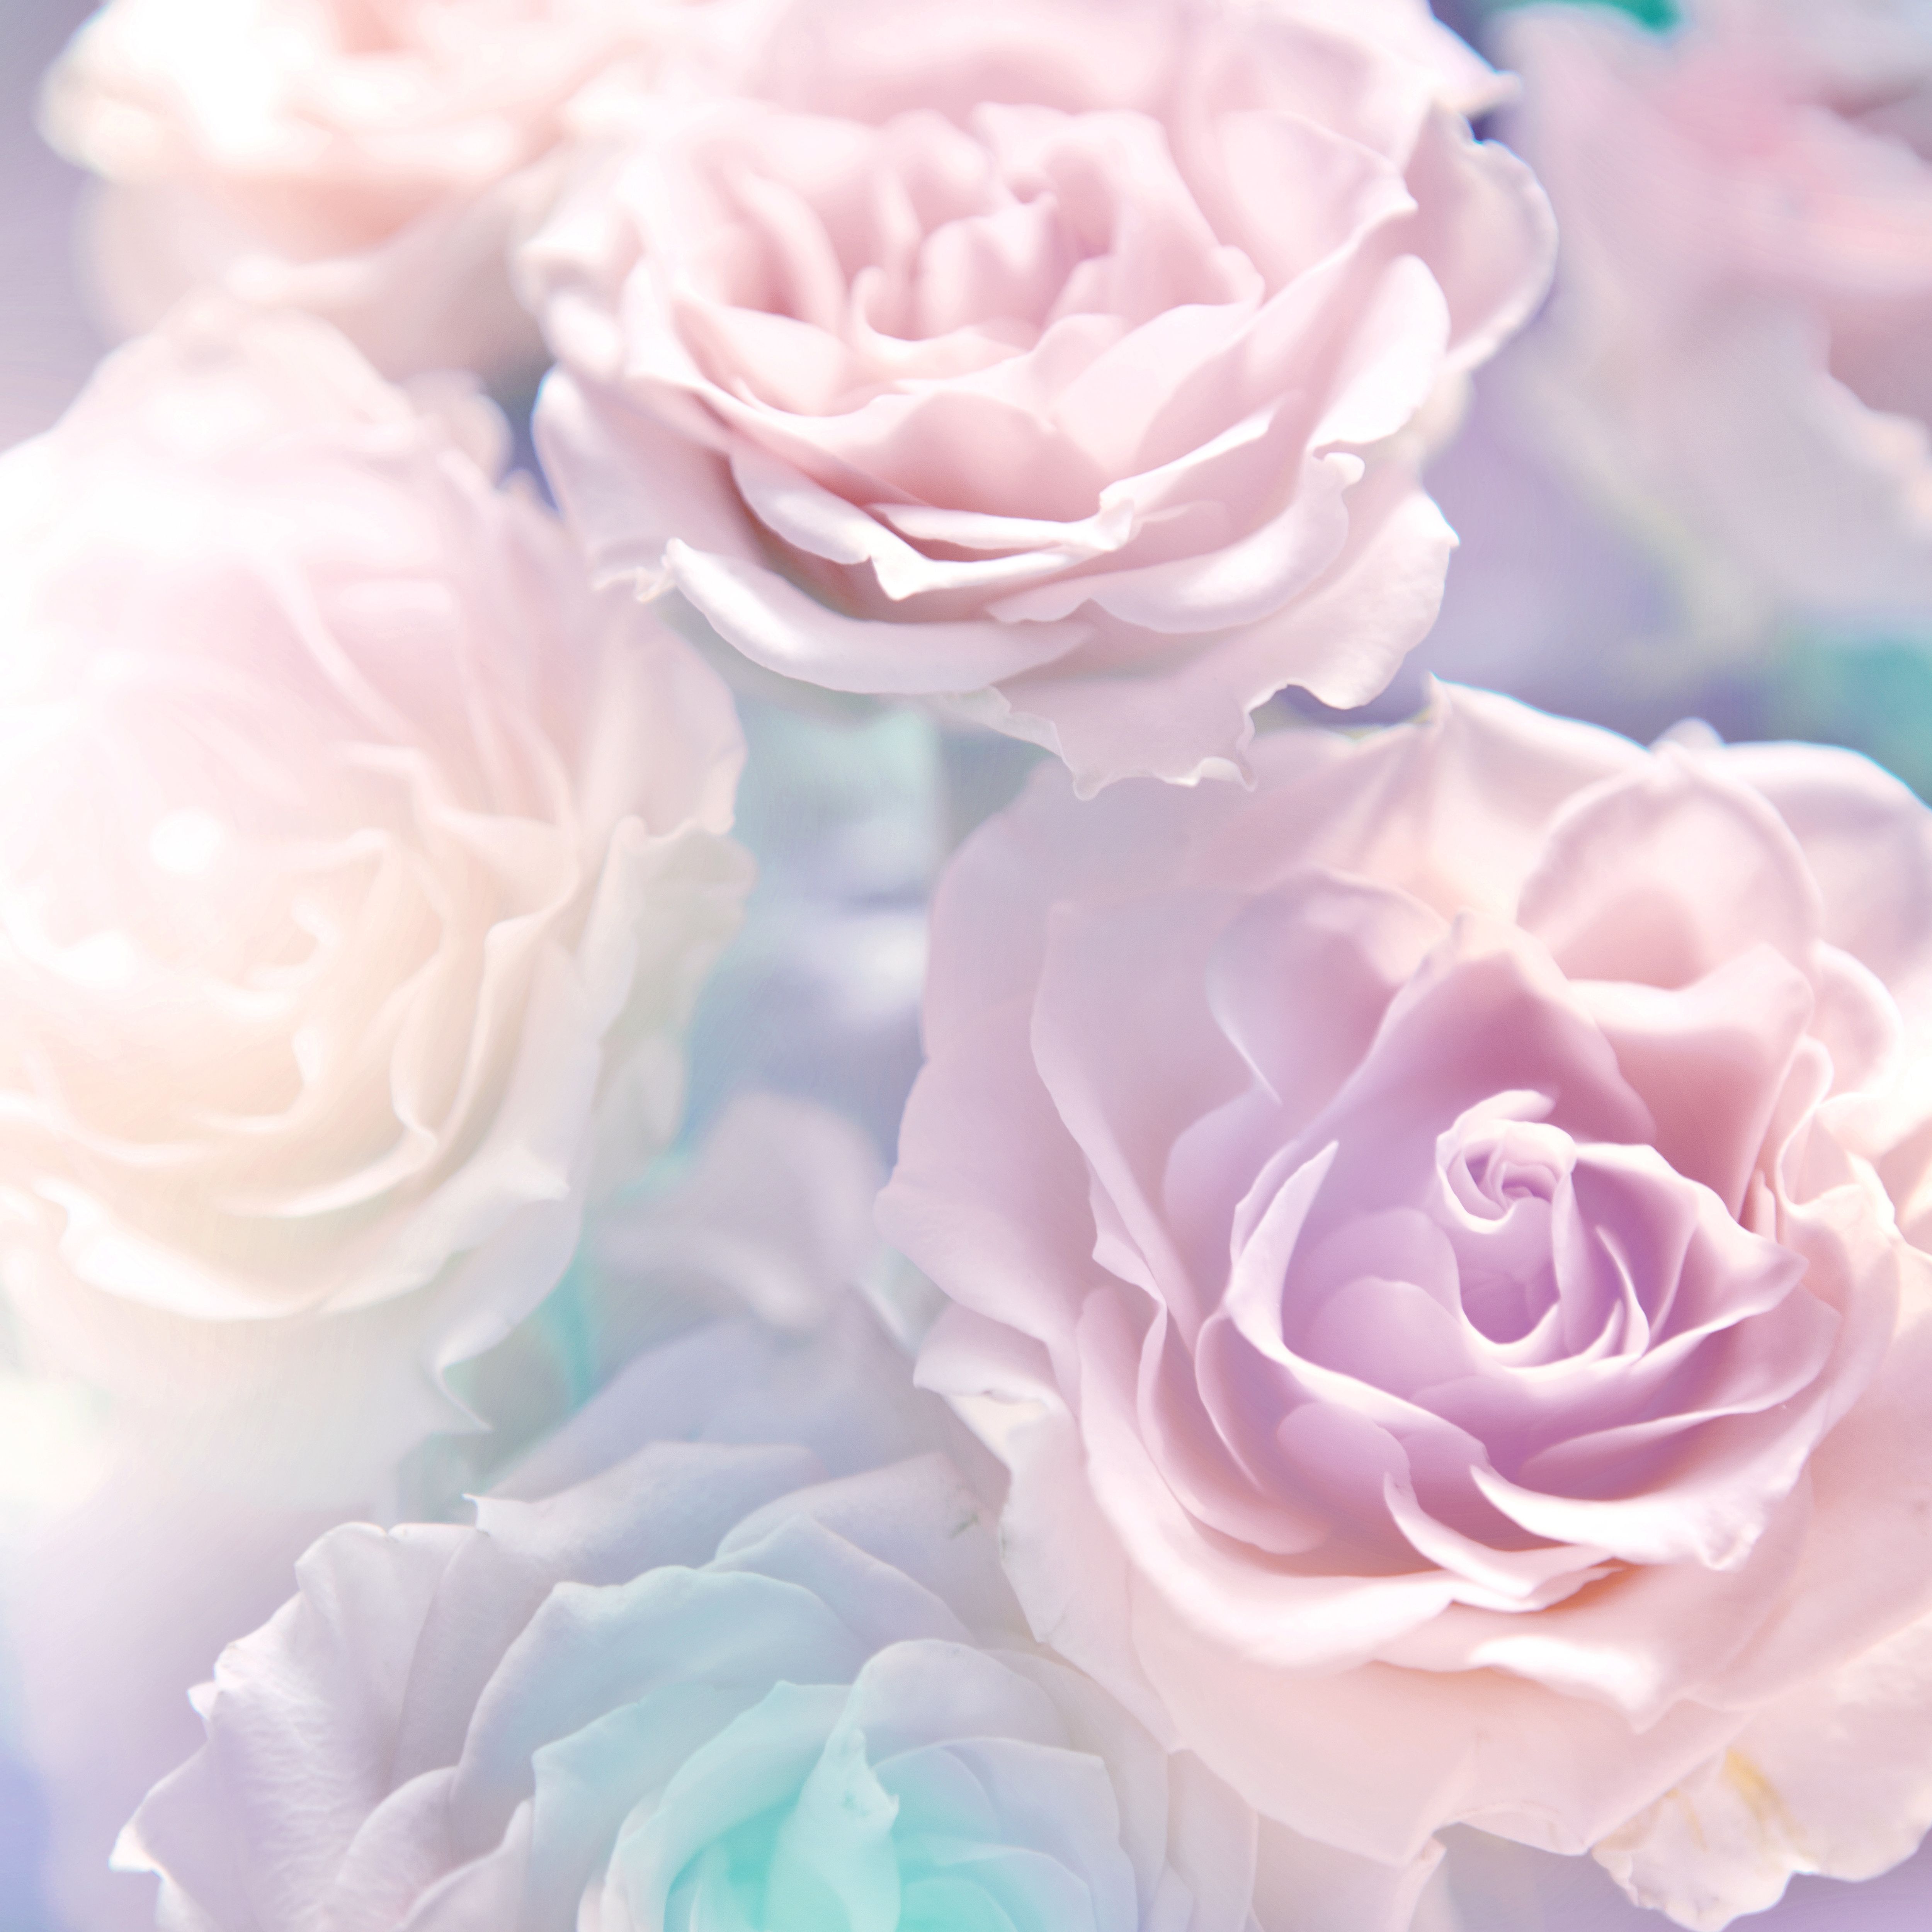 Soft Roses Background Quality Image